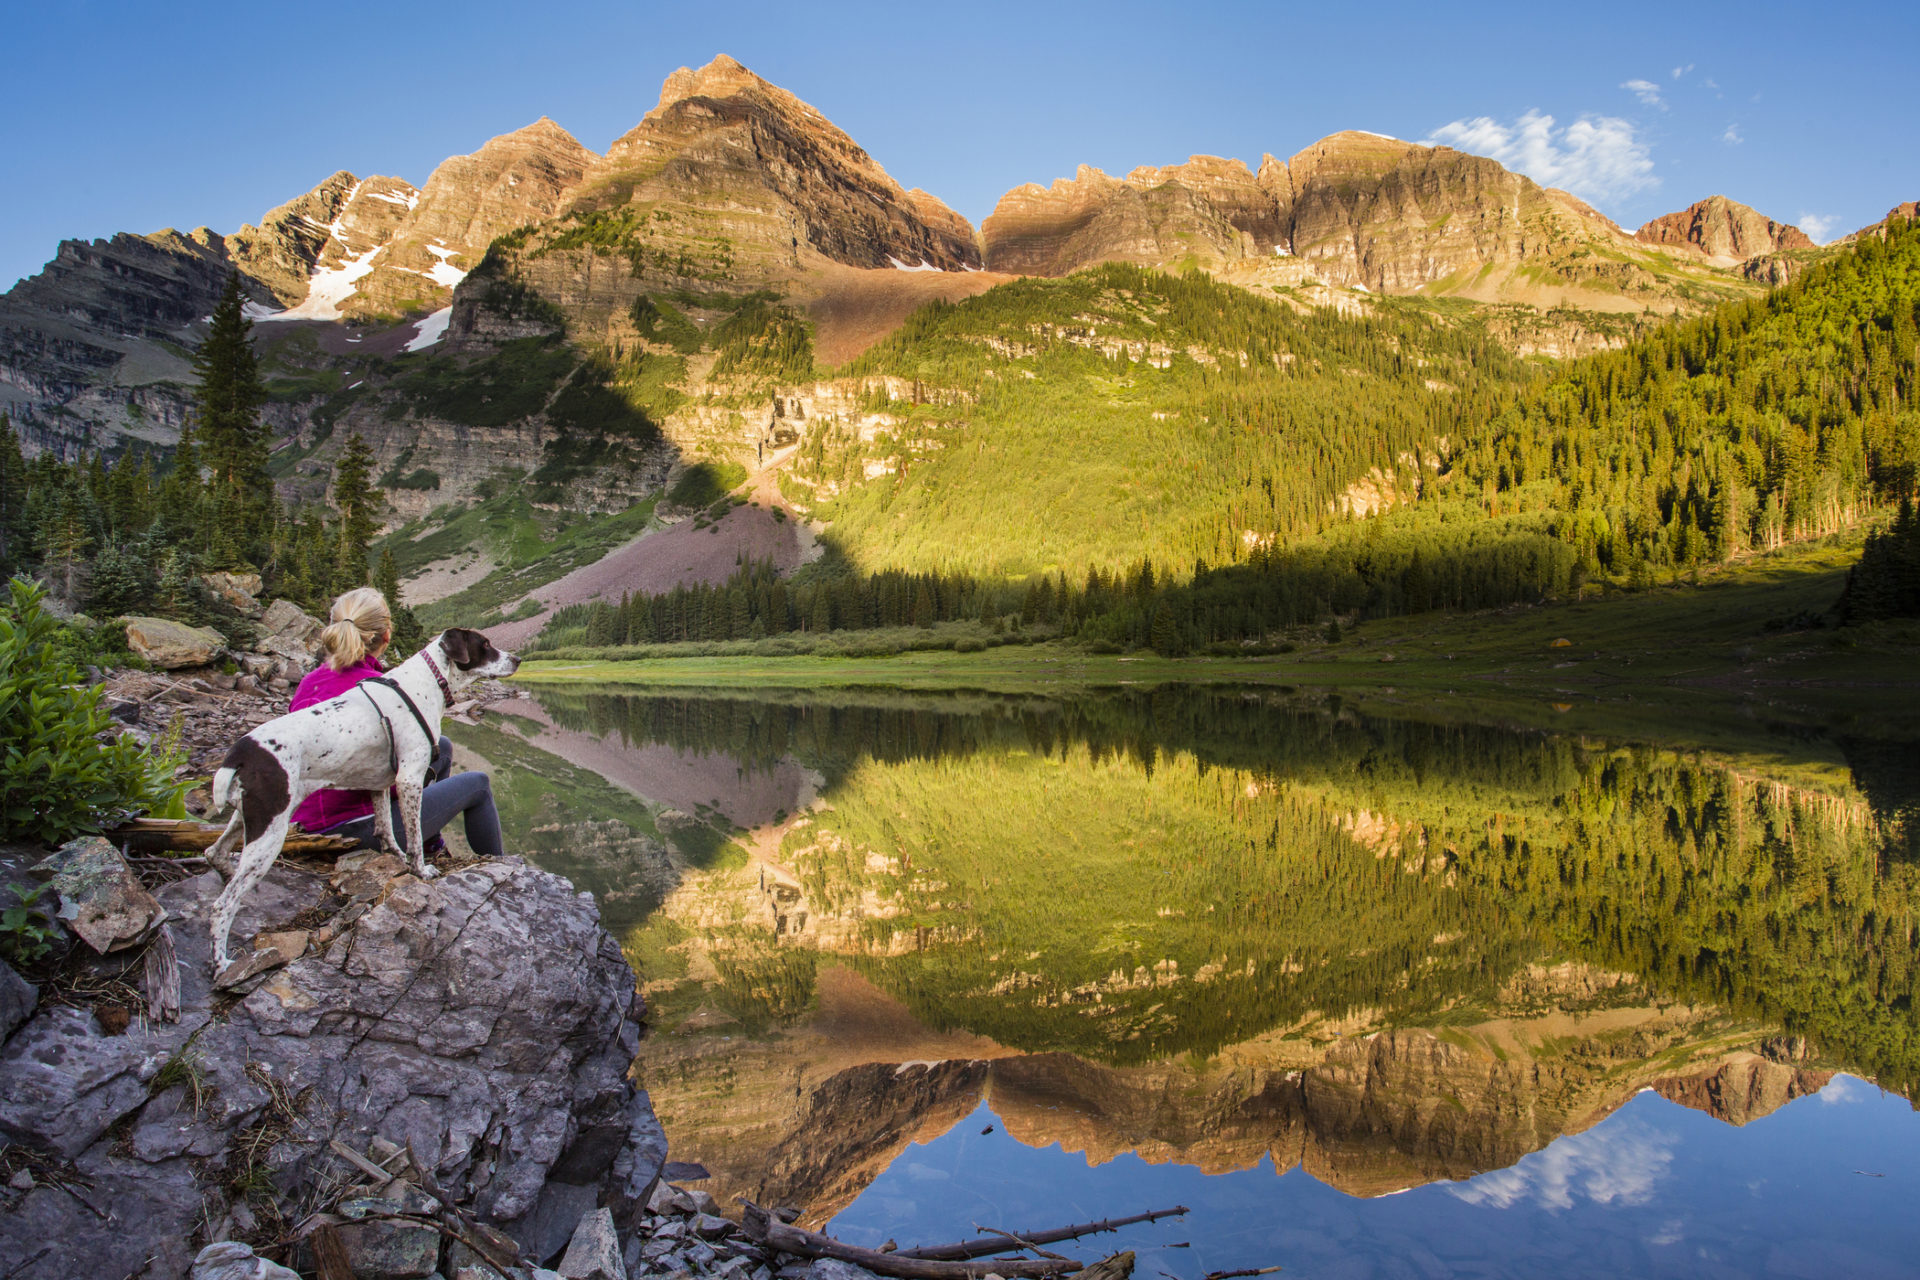 A dog and a woman sitting at a lake